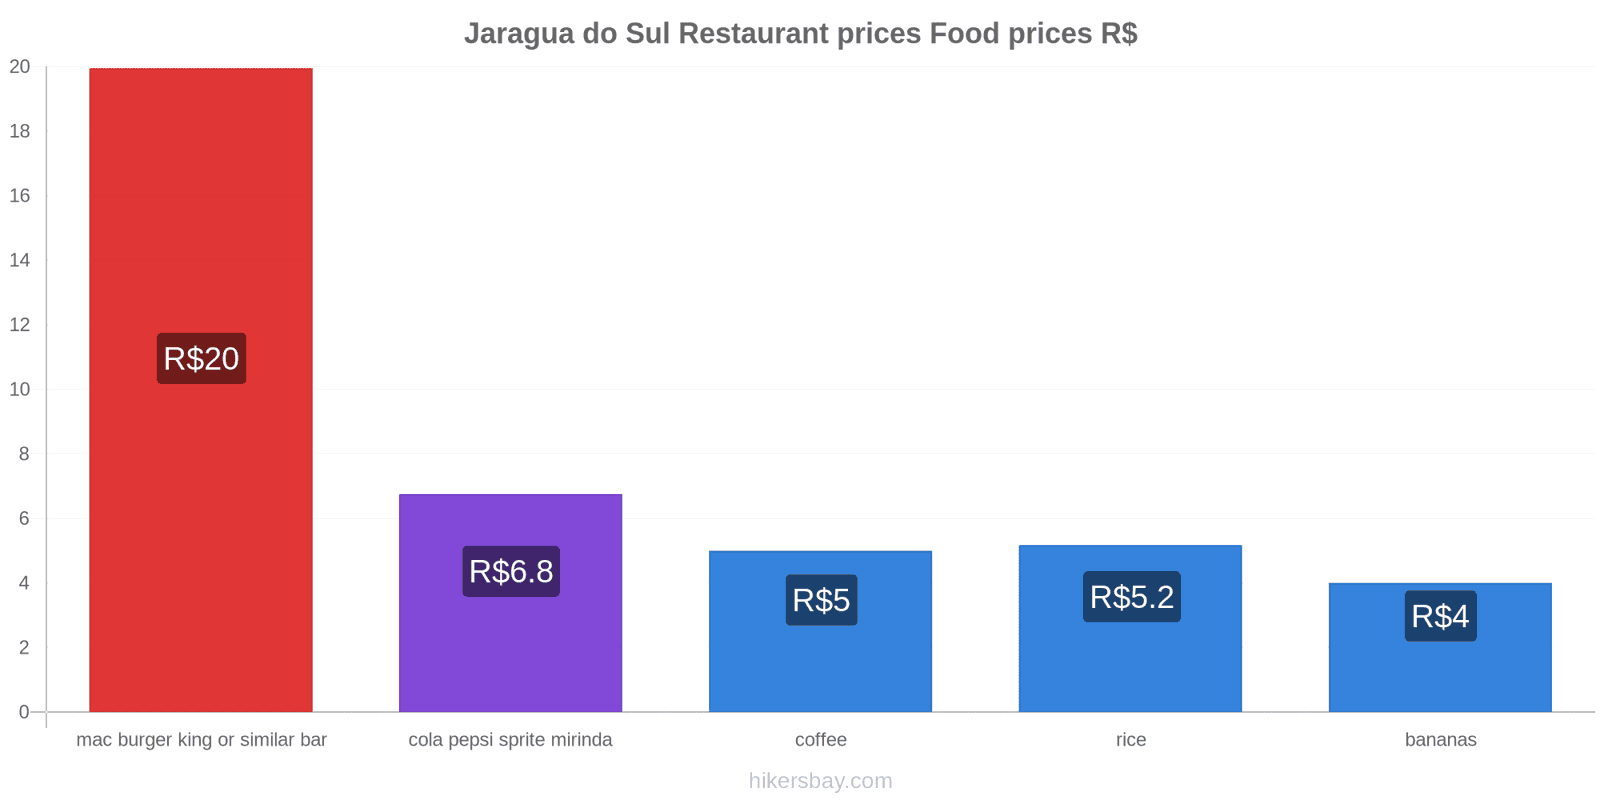 Jaragua do Sul price changes hikersbay.com